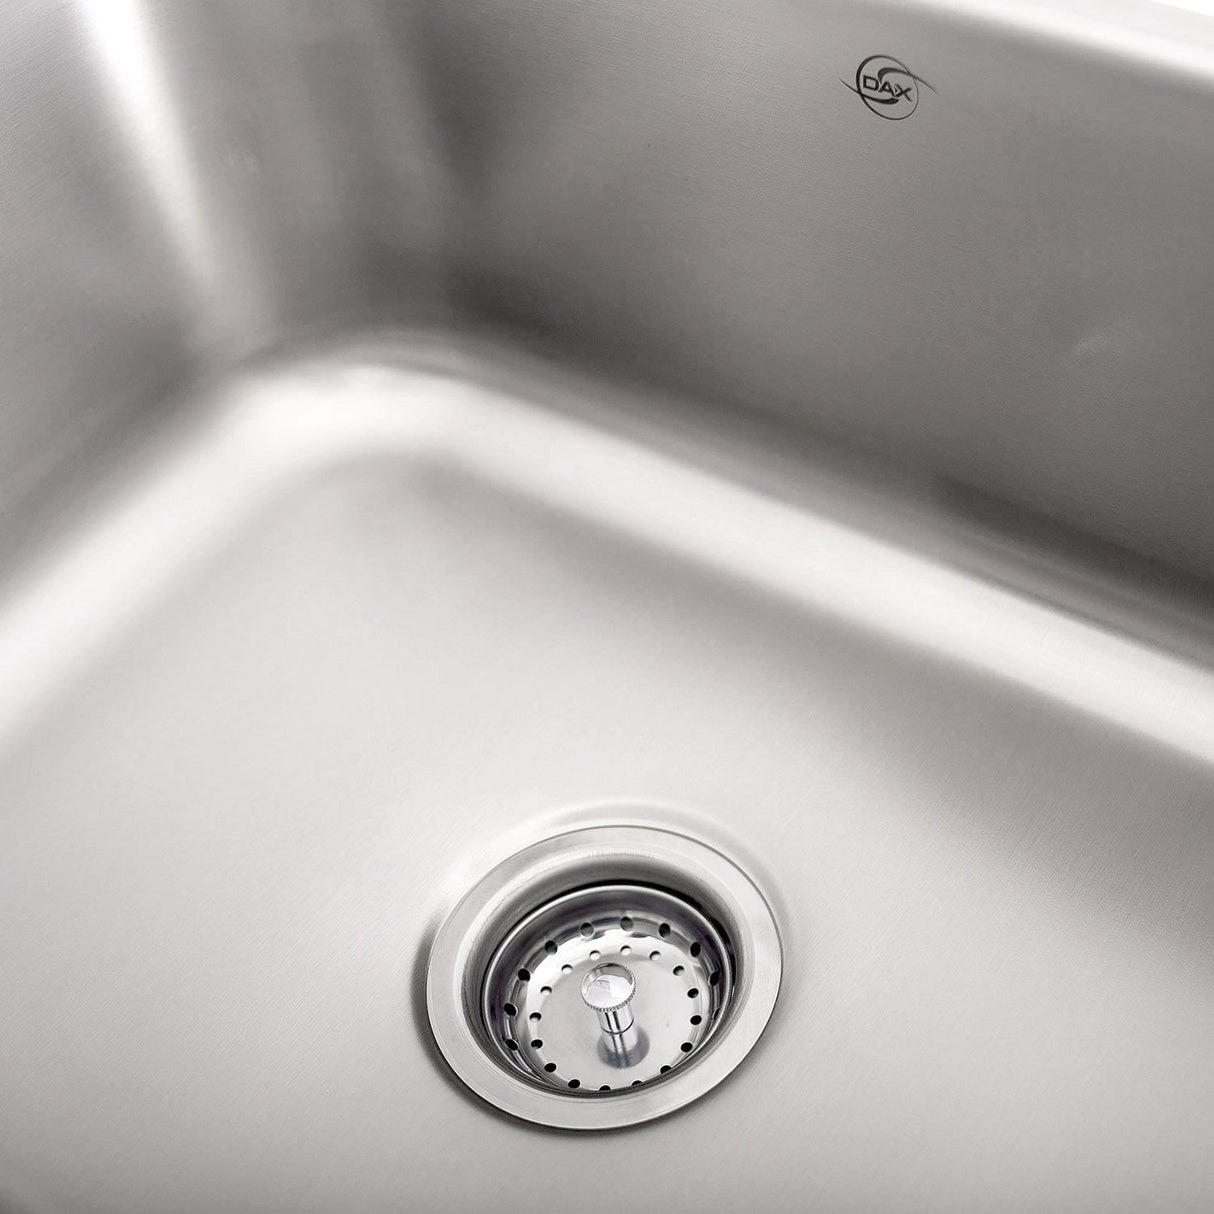 DAX Single Bowl Undermount Kitchen Sink, 18 Gauge Stainless Steel, Brushed Finish, 23-1/2 x 17-3/4 x 9 Inches (DAX-2317) DAX-2317